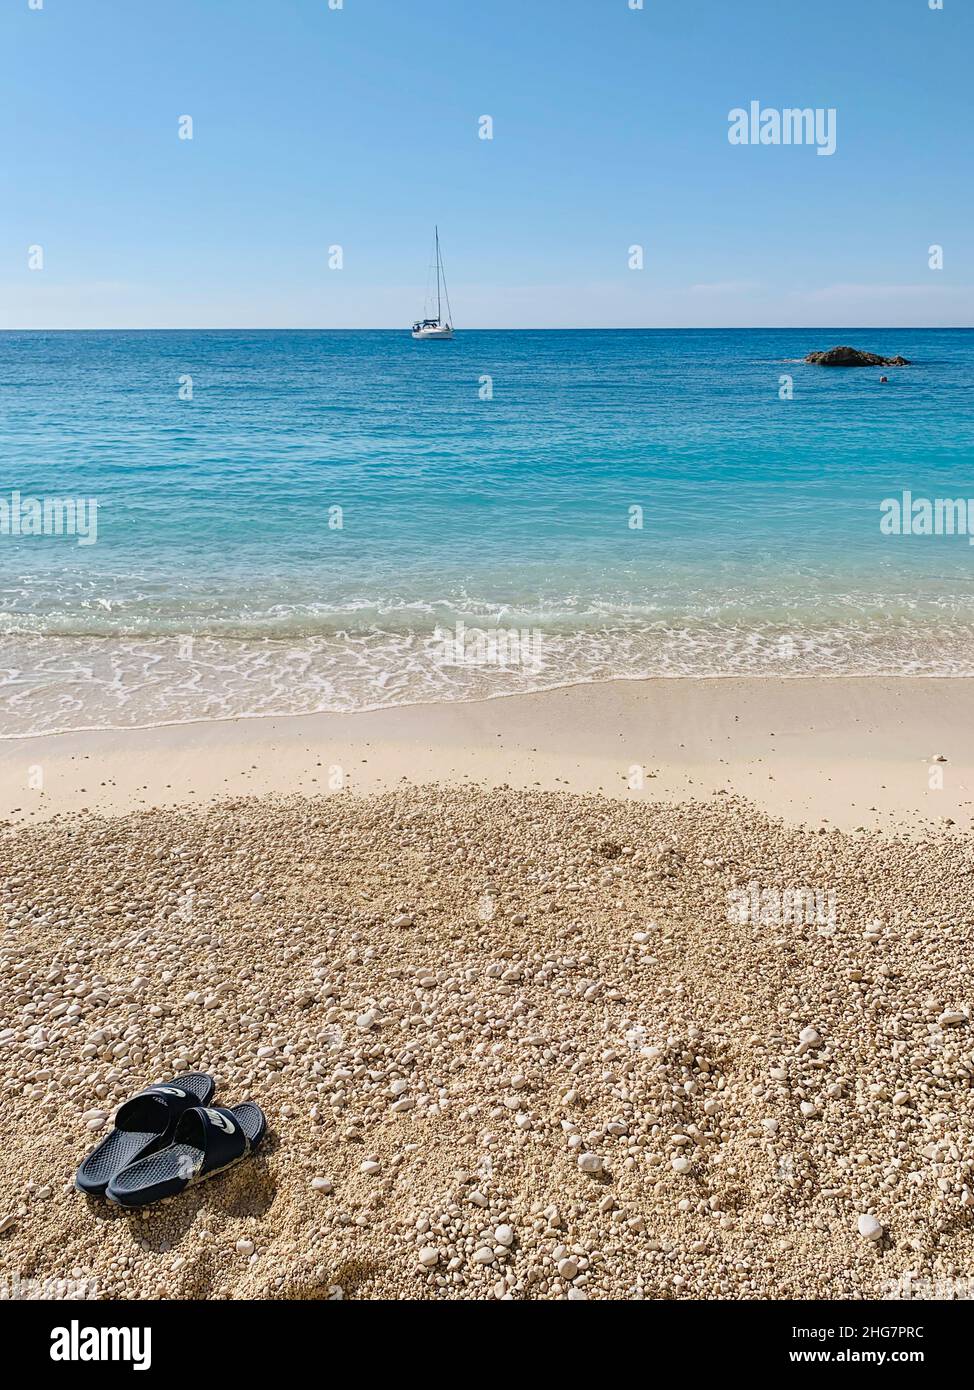 Nike Pantoffeln am Strand mit Segelboot auf dem Meer, Porto Katsiki, Stockfoto